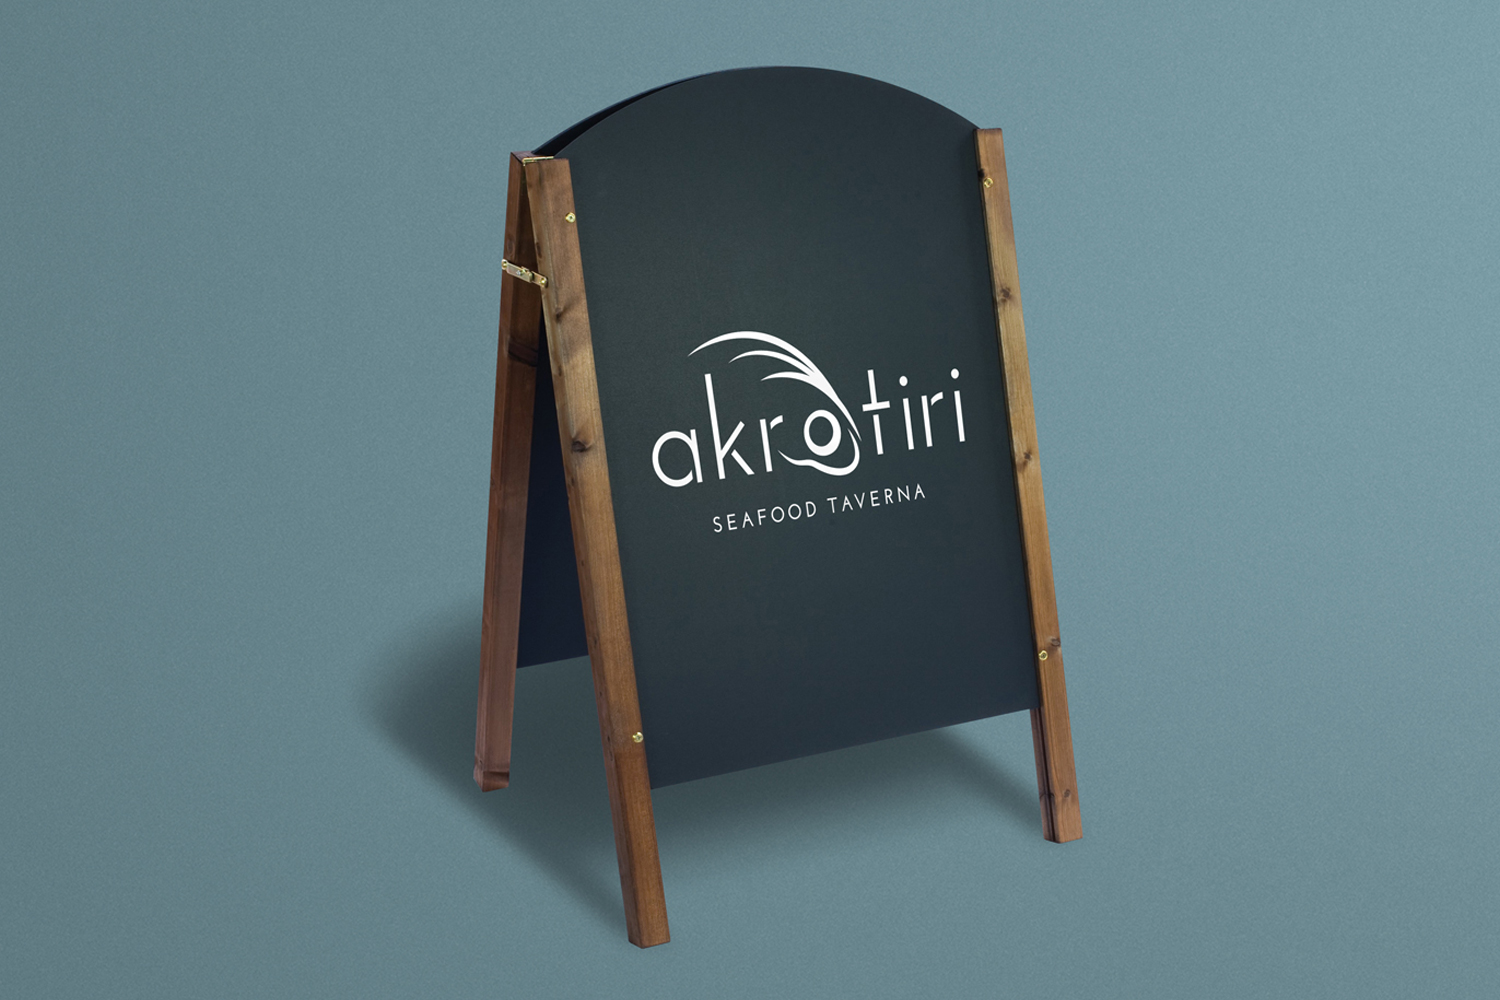 Akrotiri: Restaurant Logo Design